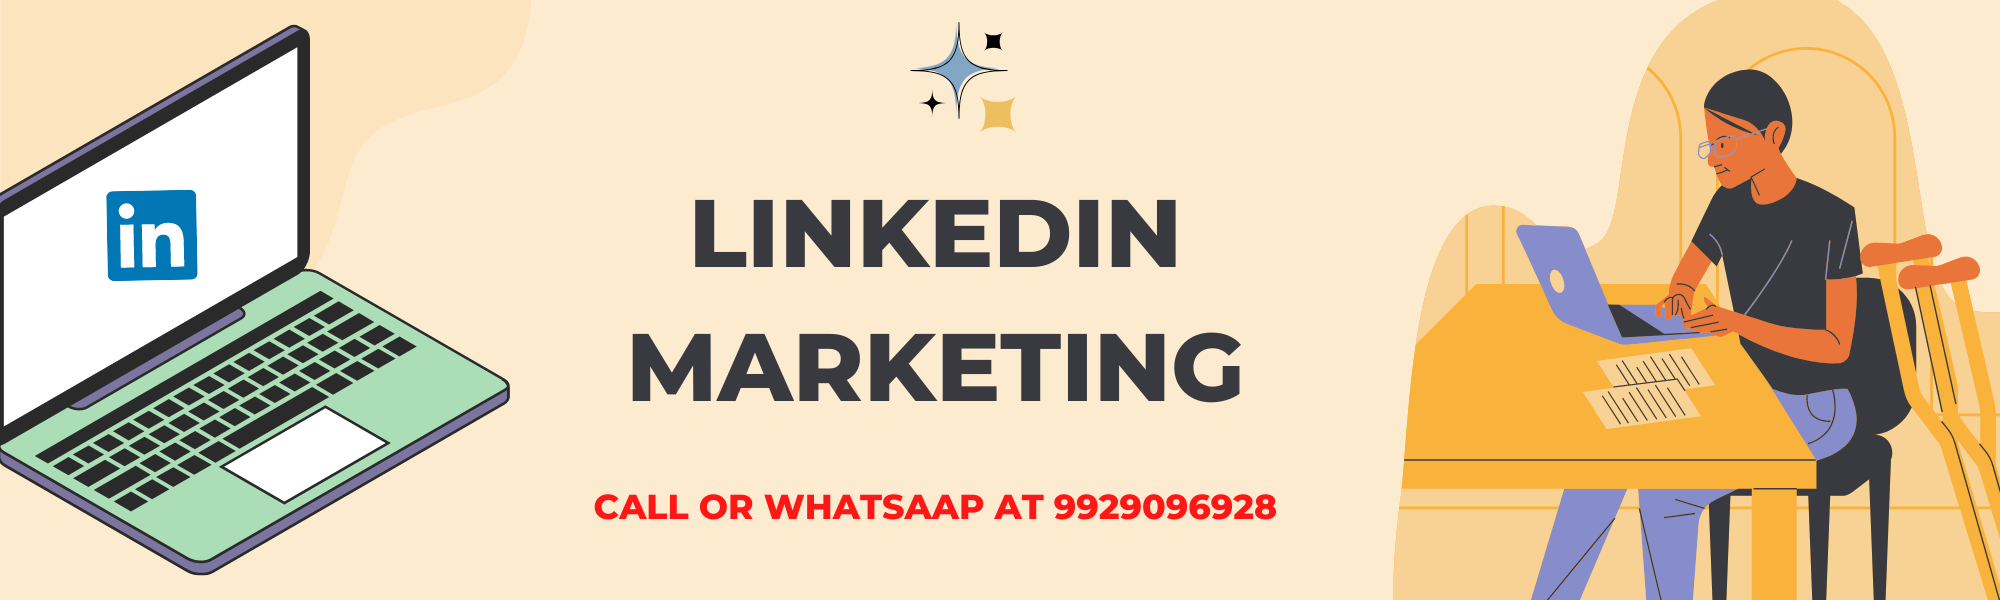 LinkedIn Marketing Expert Agency Service in Jaipur